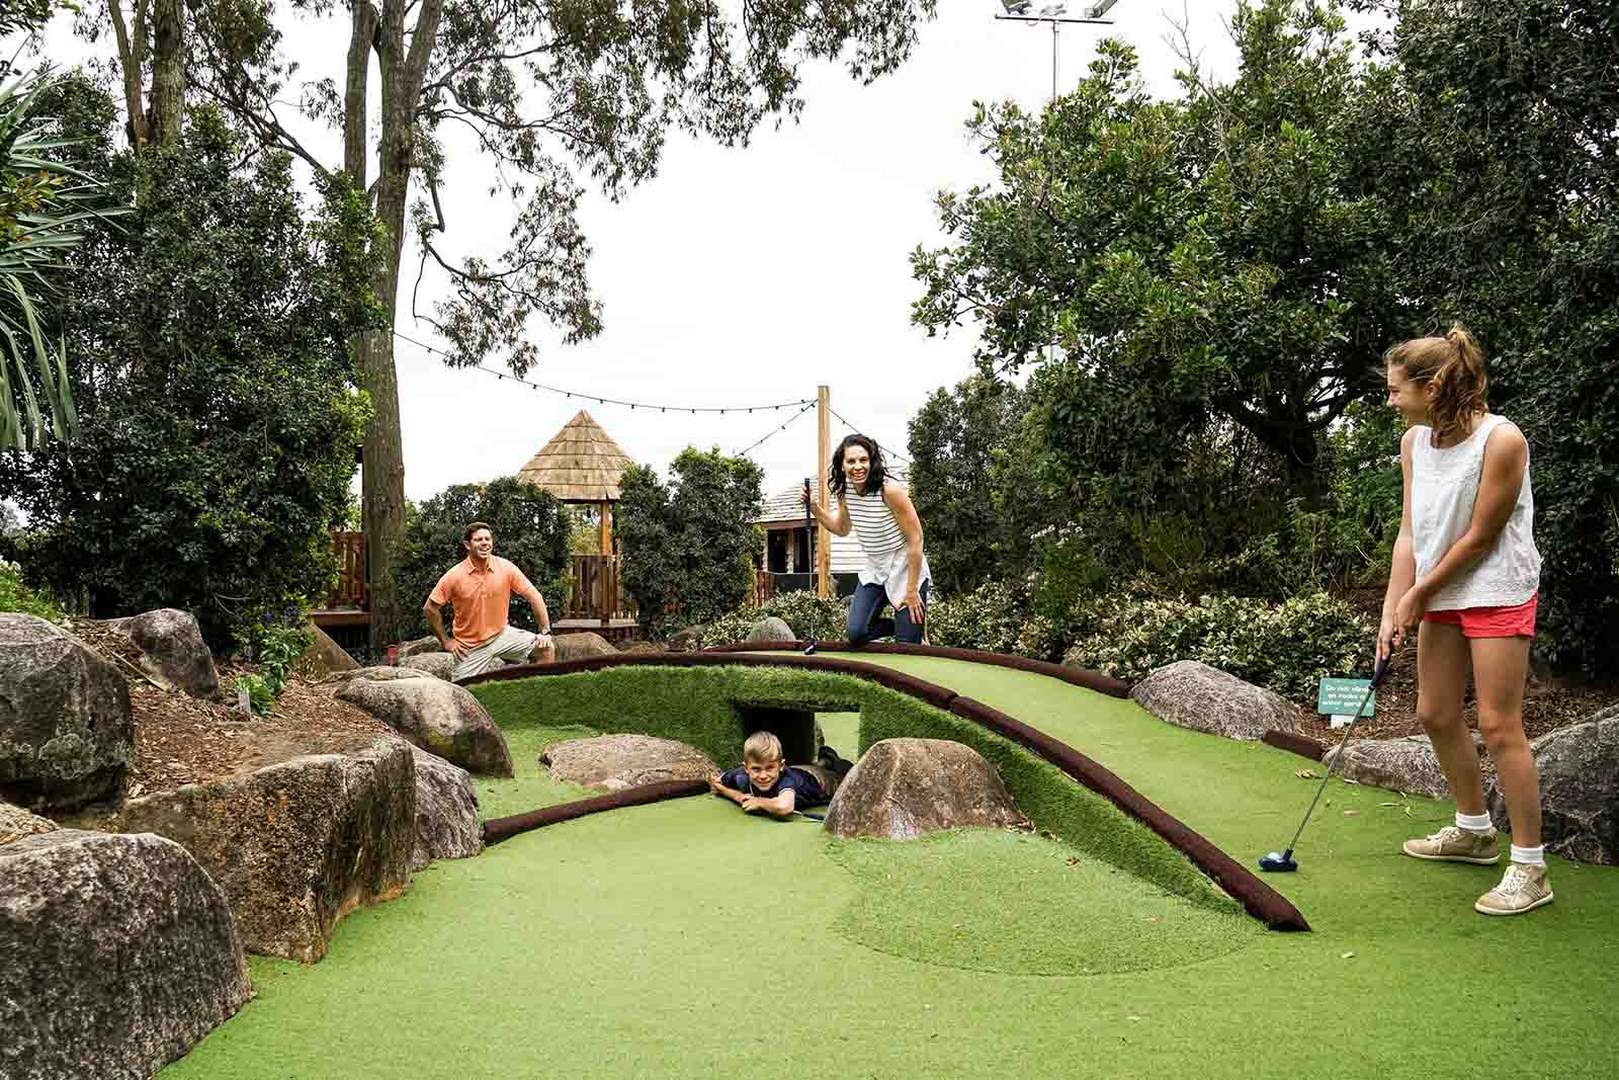 Putt putt at Victoria Park, Brisbane | 15 cool family fun adventures